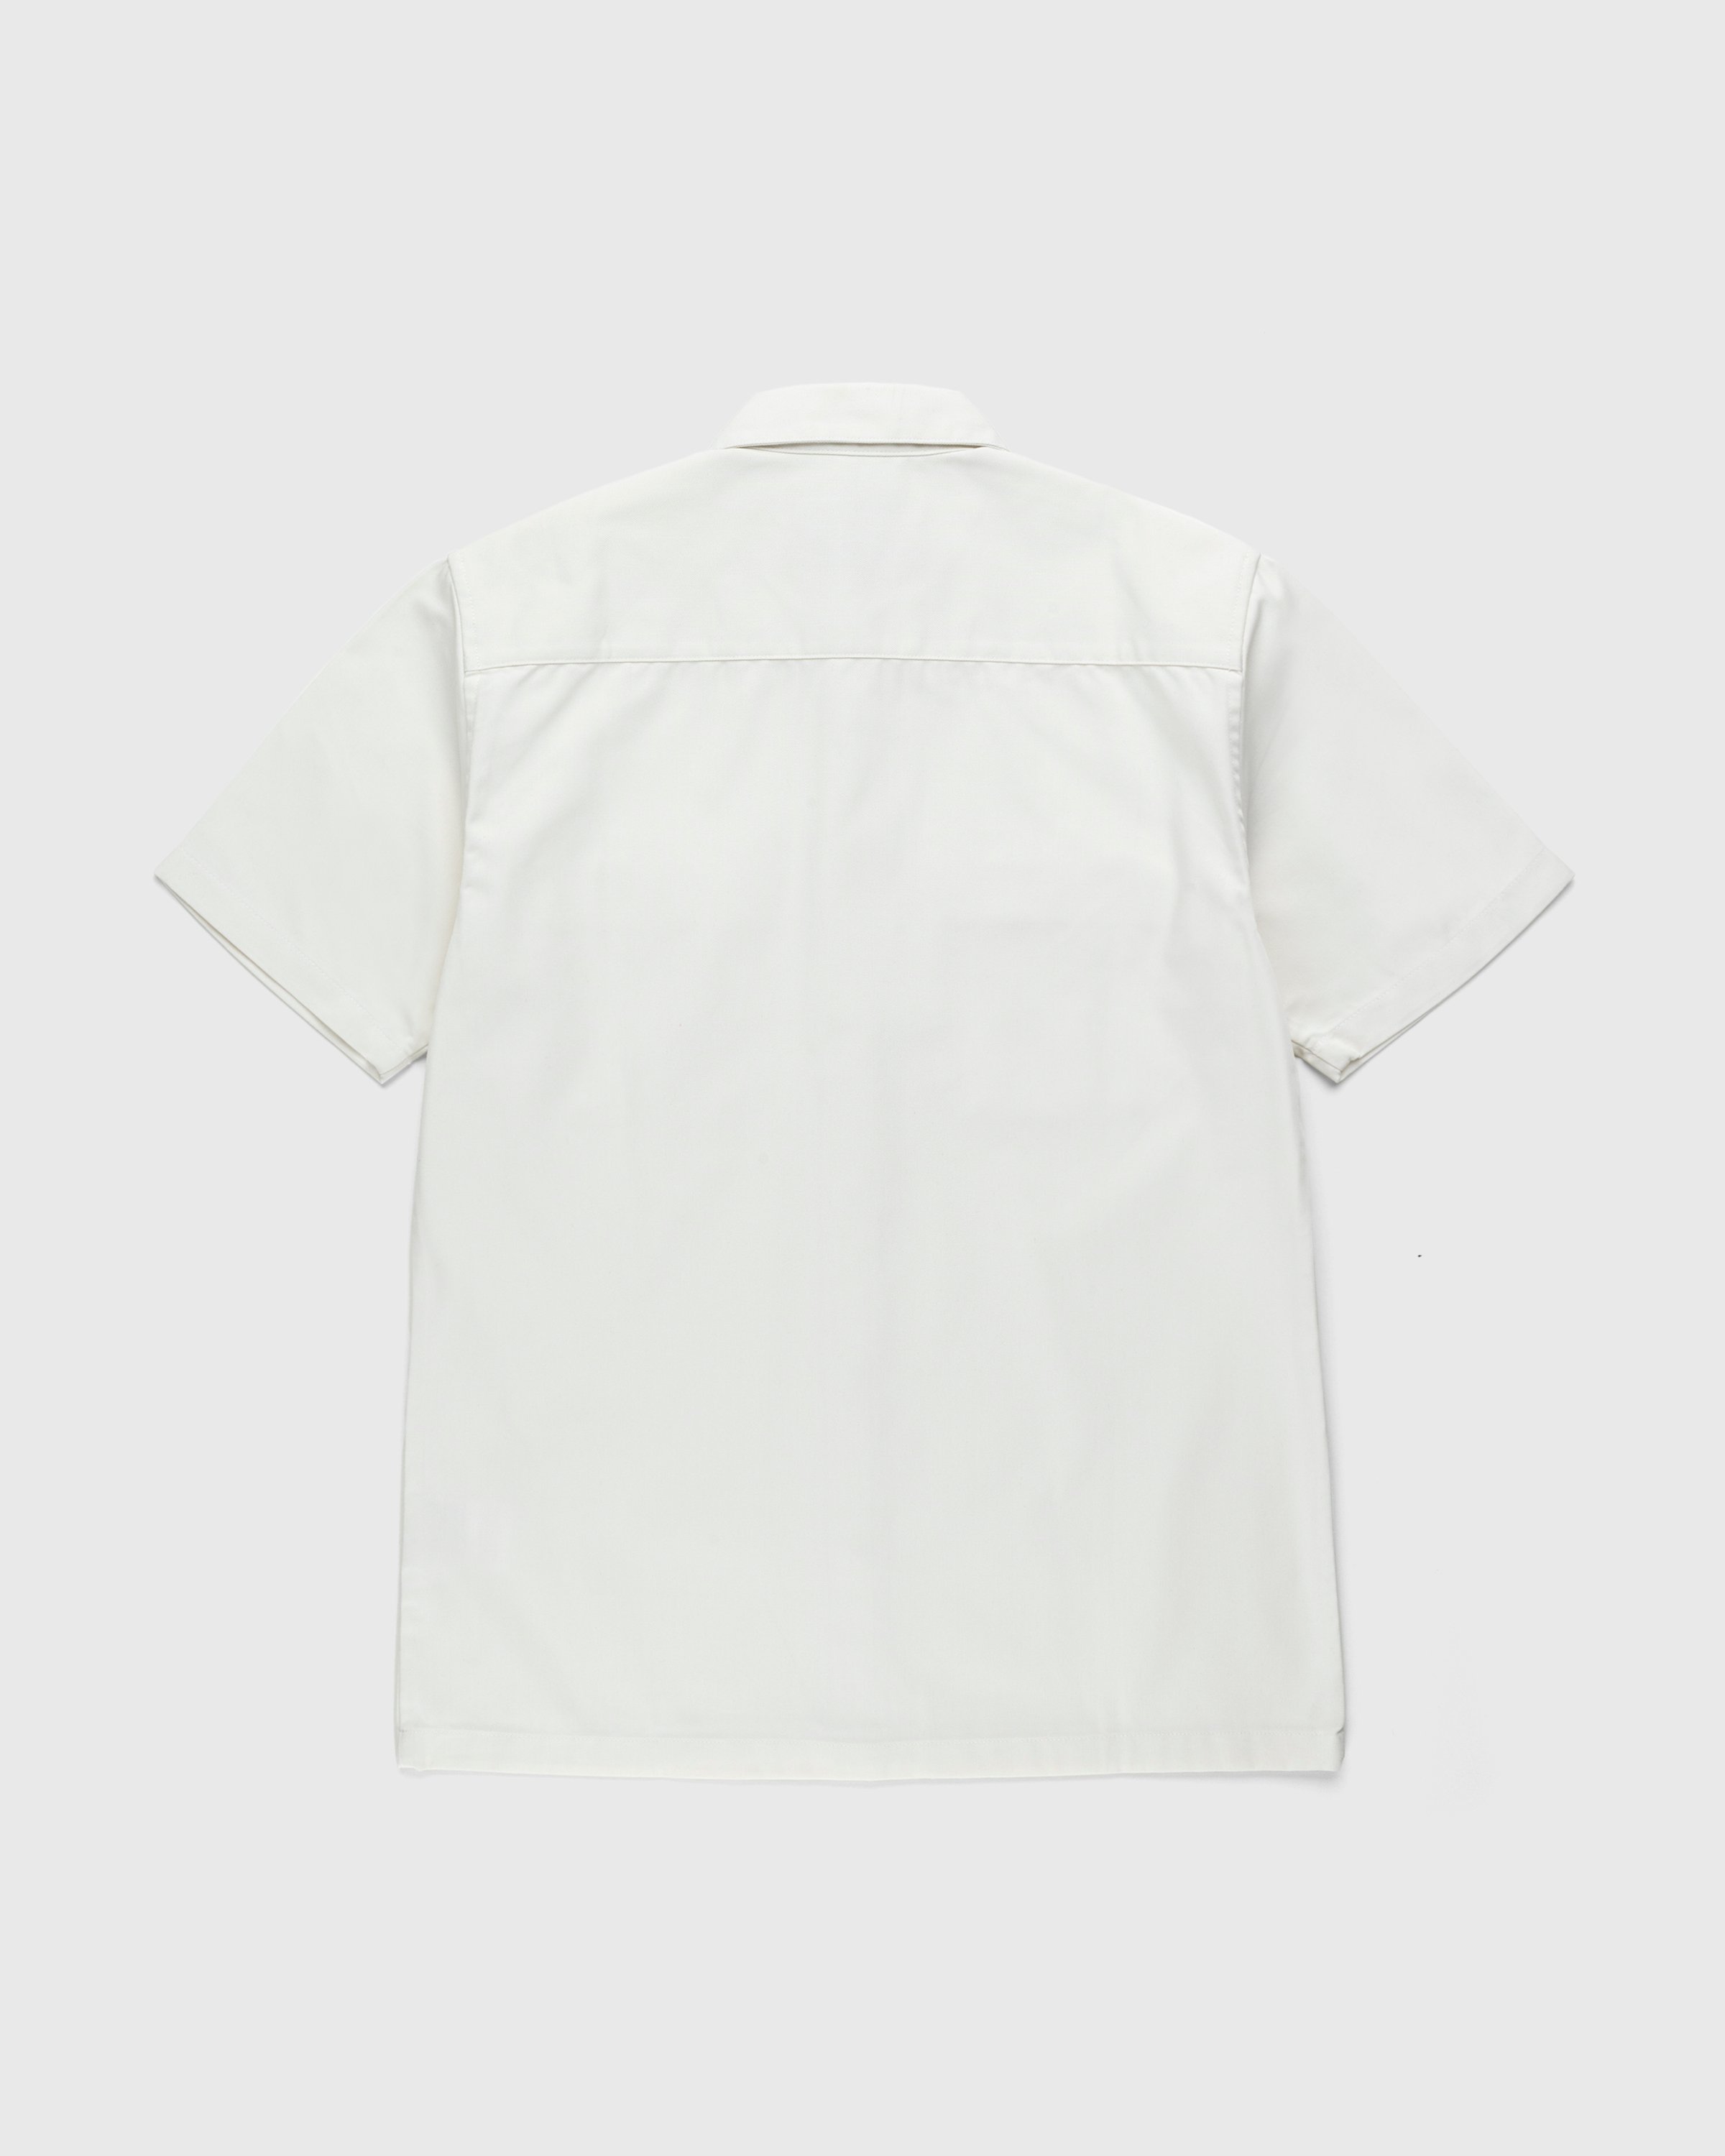 Carhartt WIP – Master Shirt Wax | Highsnobiety Shop